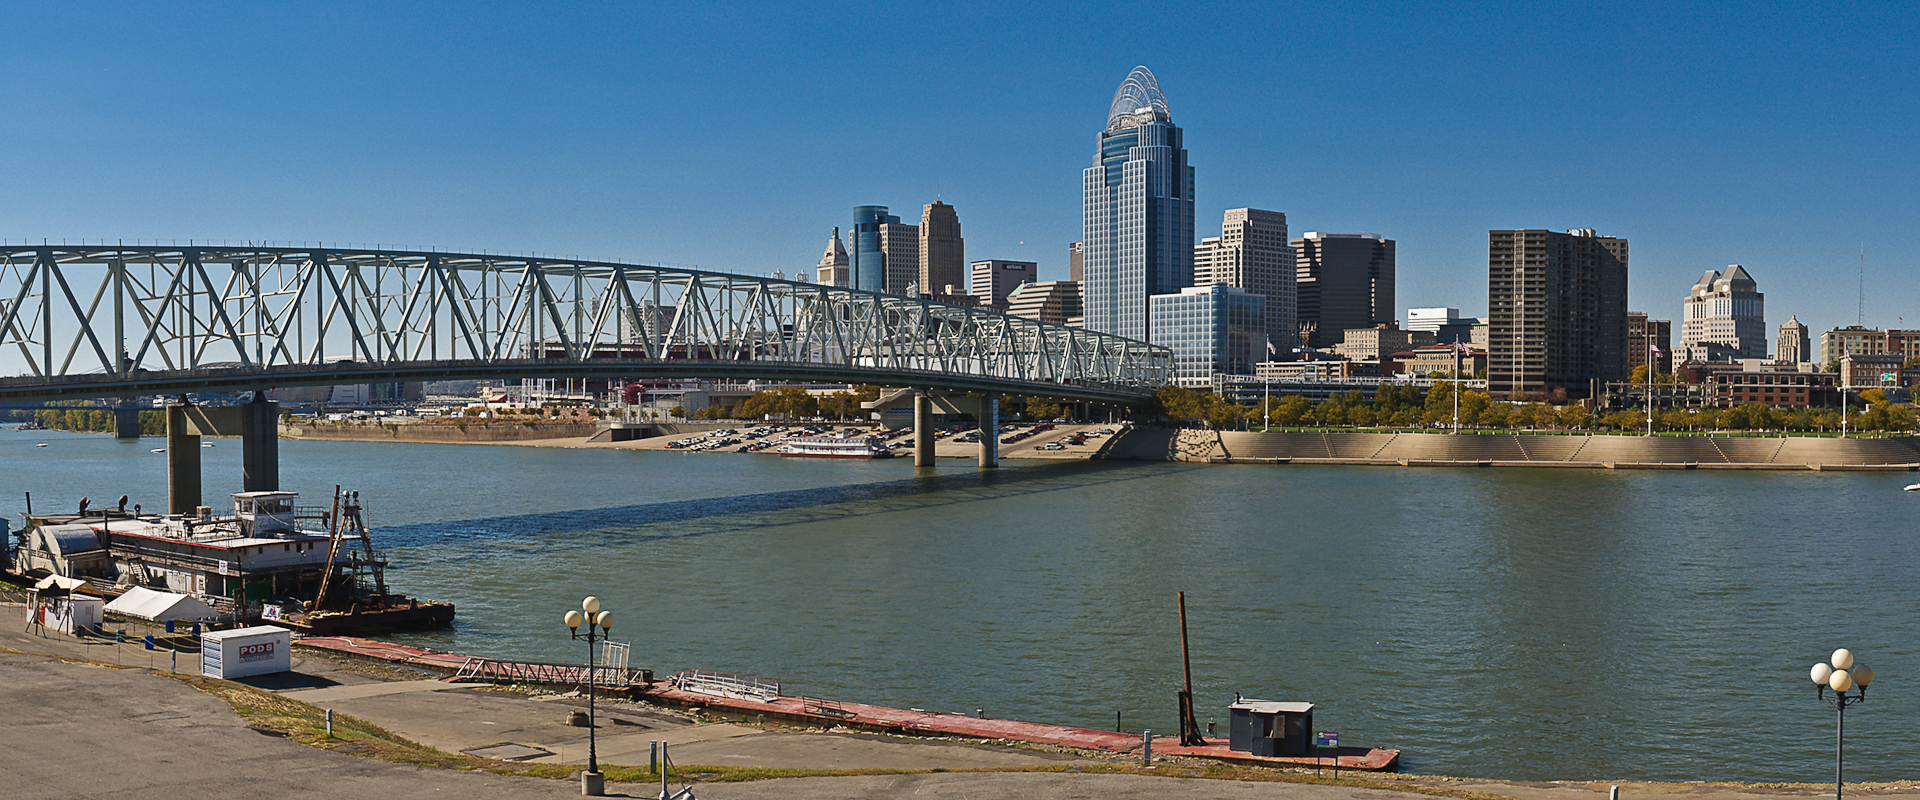 Cincinnati and the Ohio River